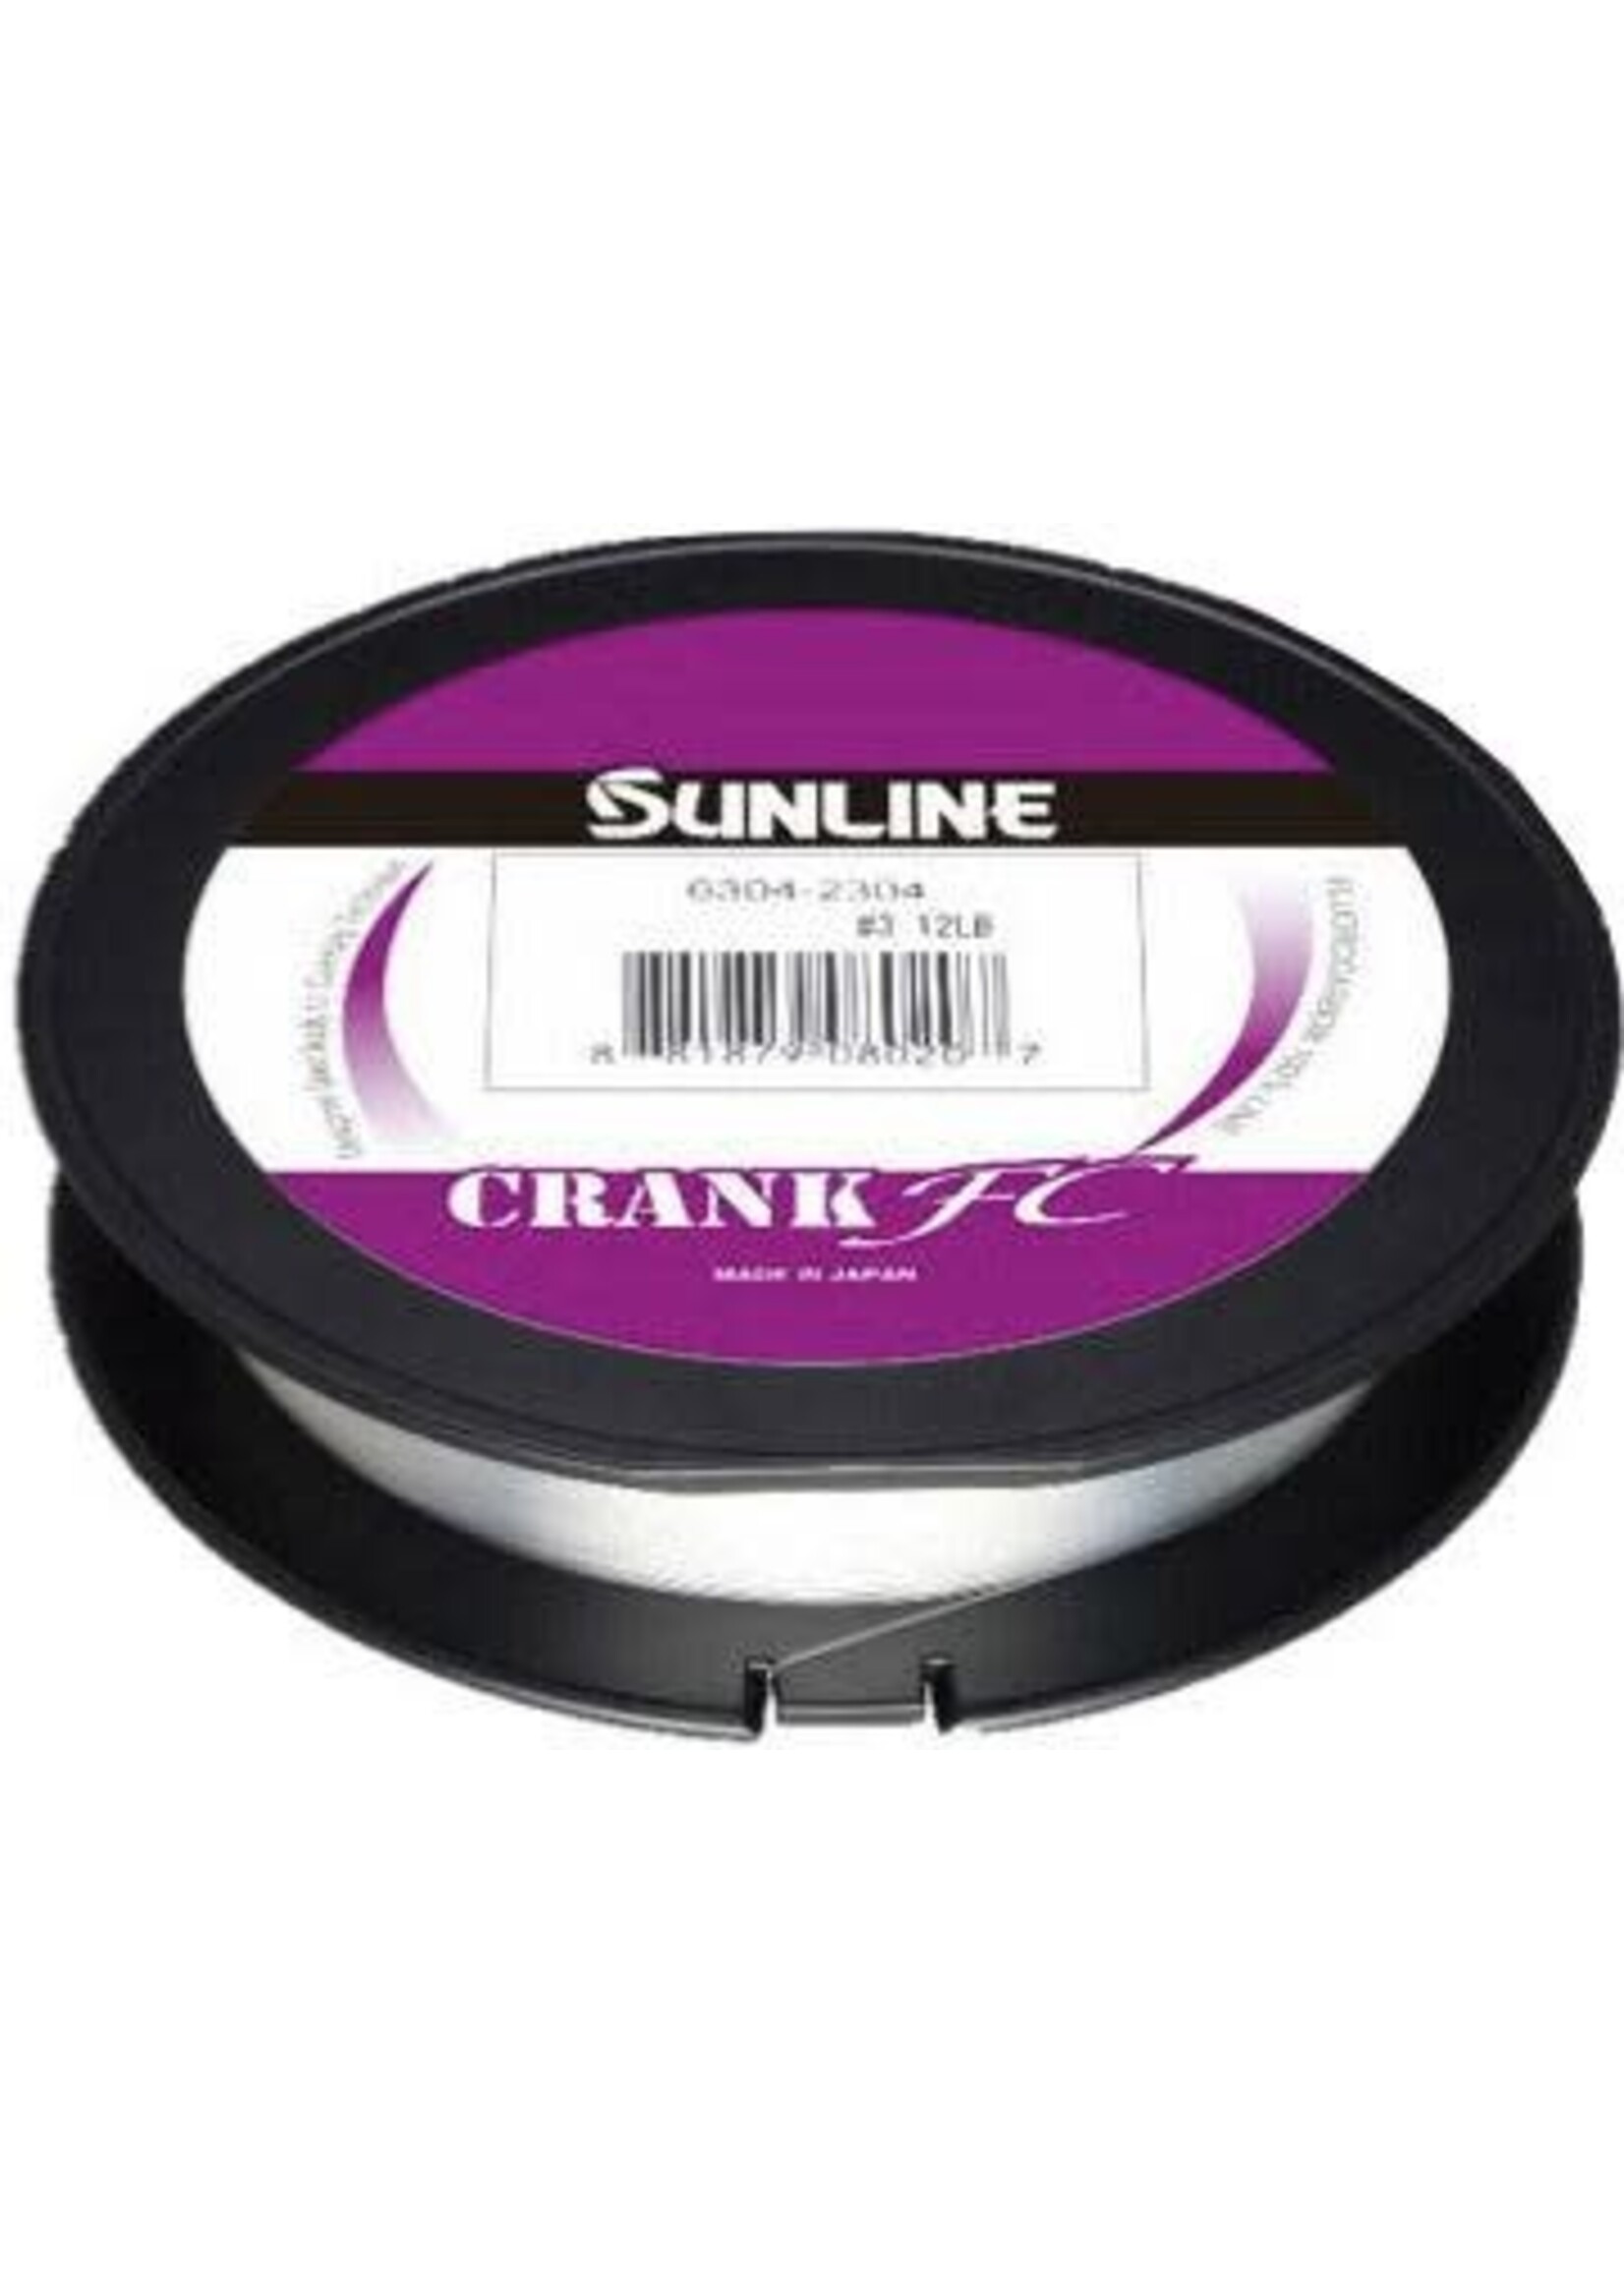 Sunline Sunline Crank FC